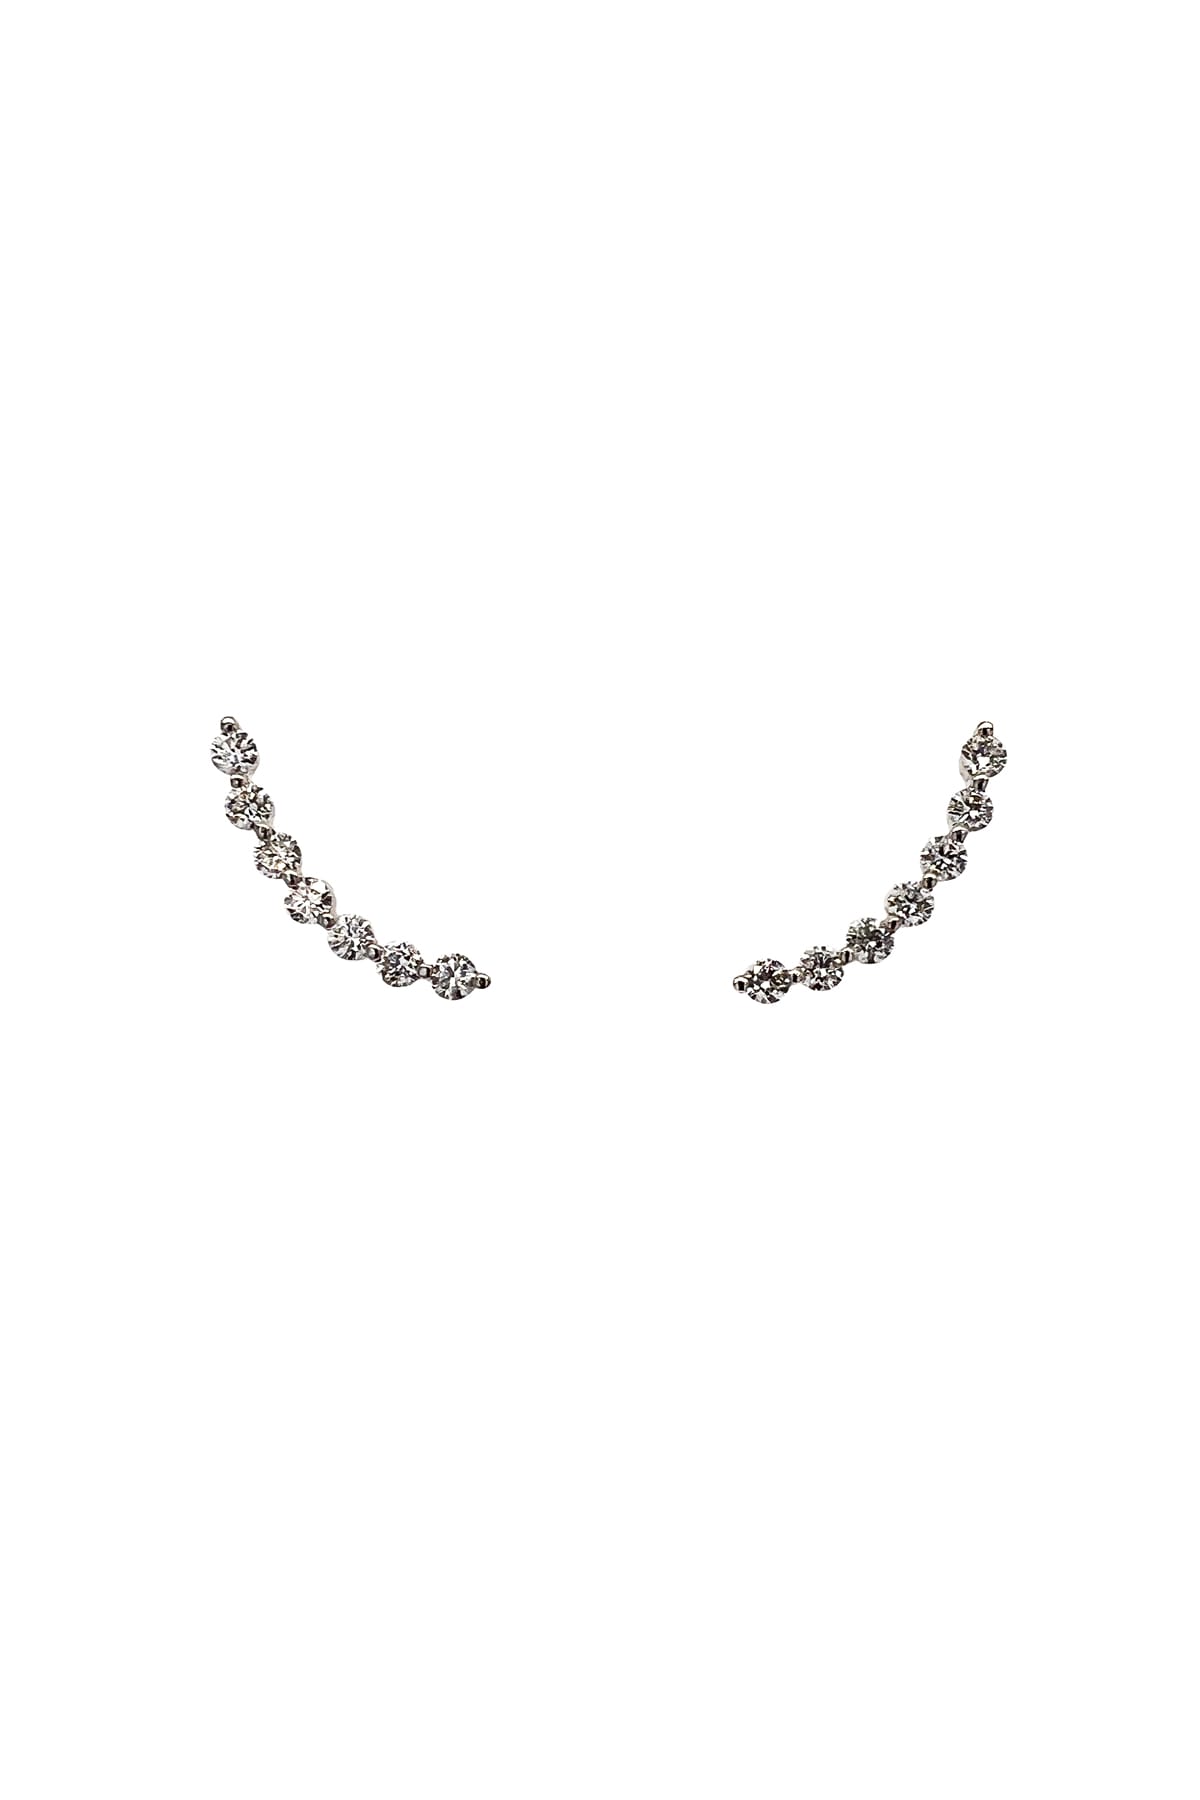 18 Carat White Gold Diamond Bar Stud Earrings available at LeGassick Diamonds and Jewellery Gold Coast, Australia.